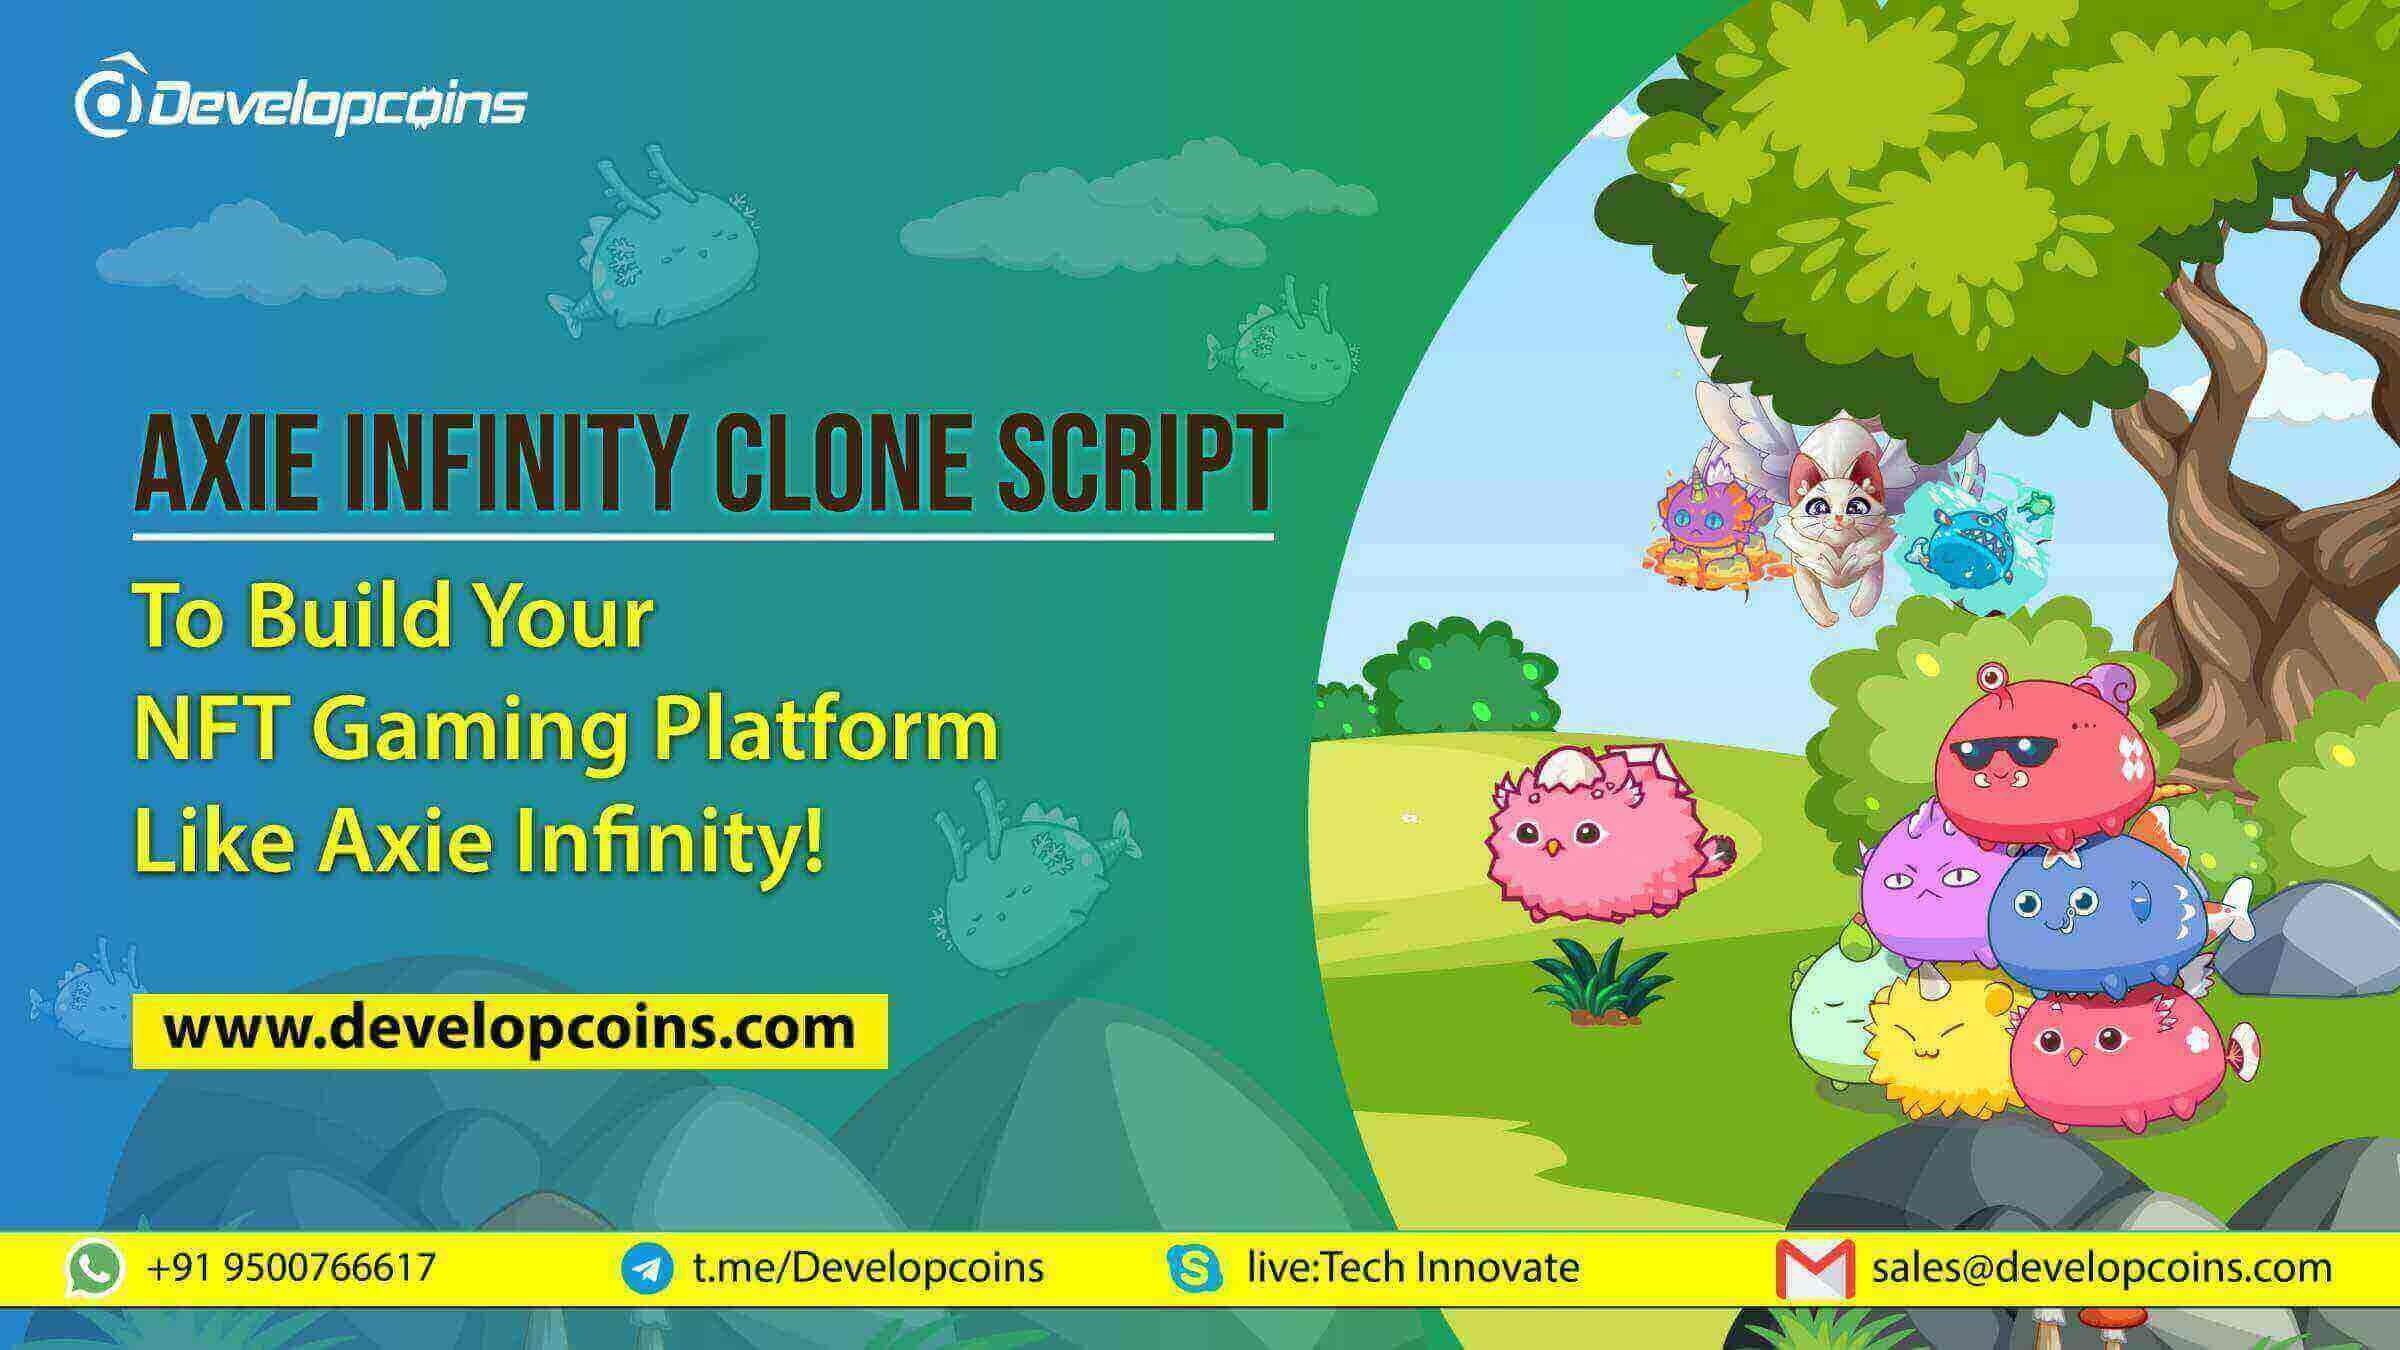 Axie Infinity Clone Script - To Build NFT Gaming Platform Like Axie Infinity